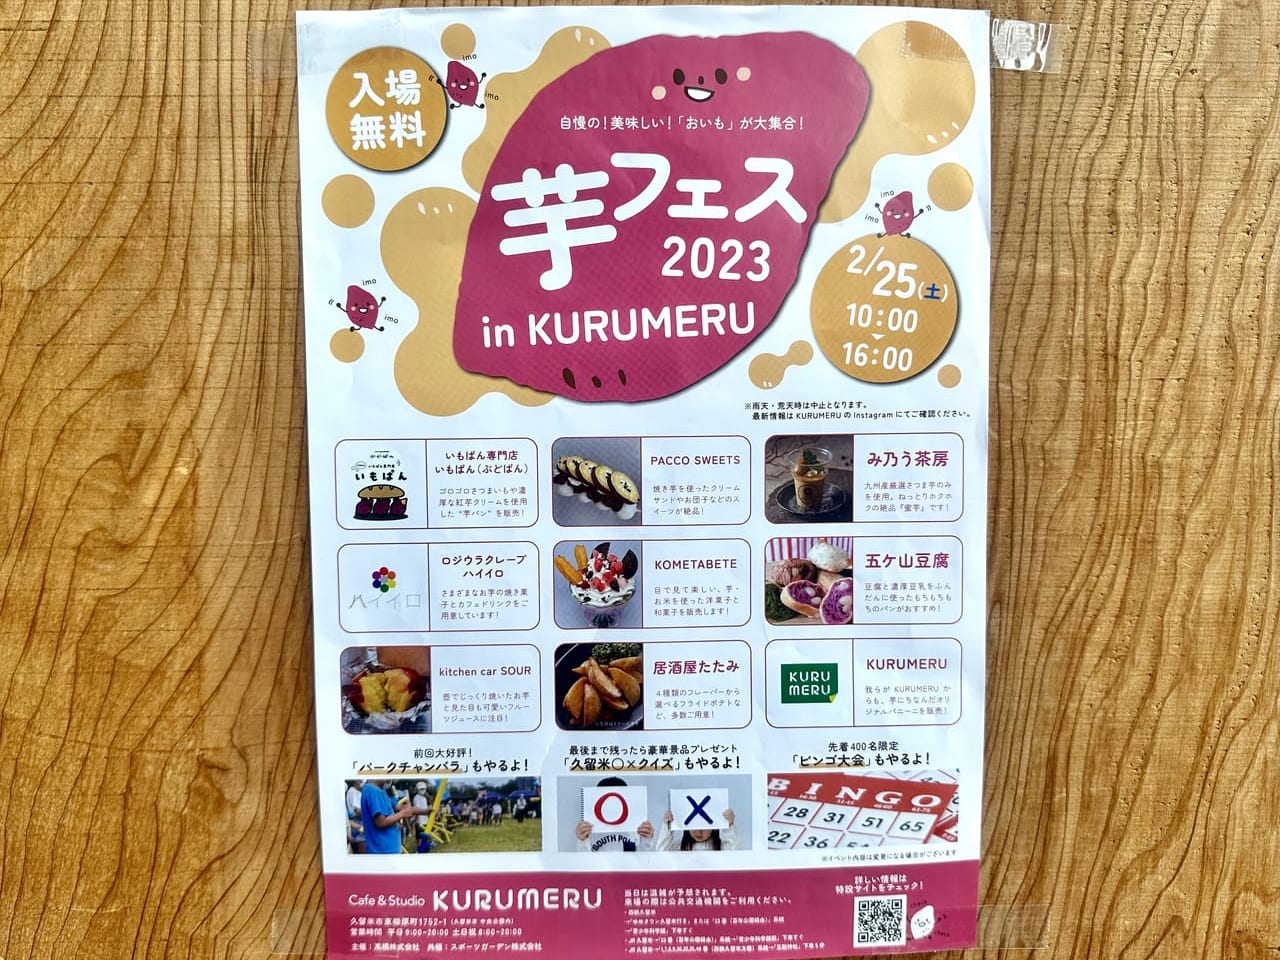 2023年芋フェス2023 in KURUMERU